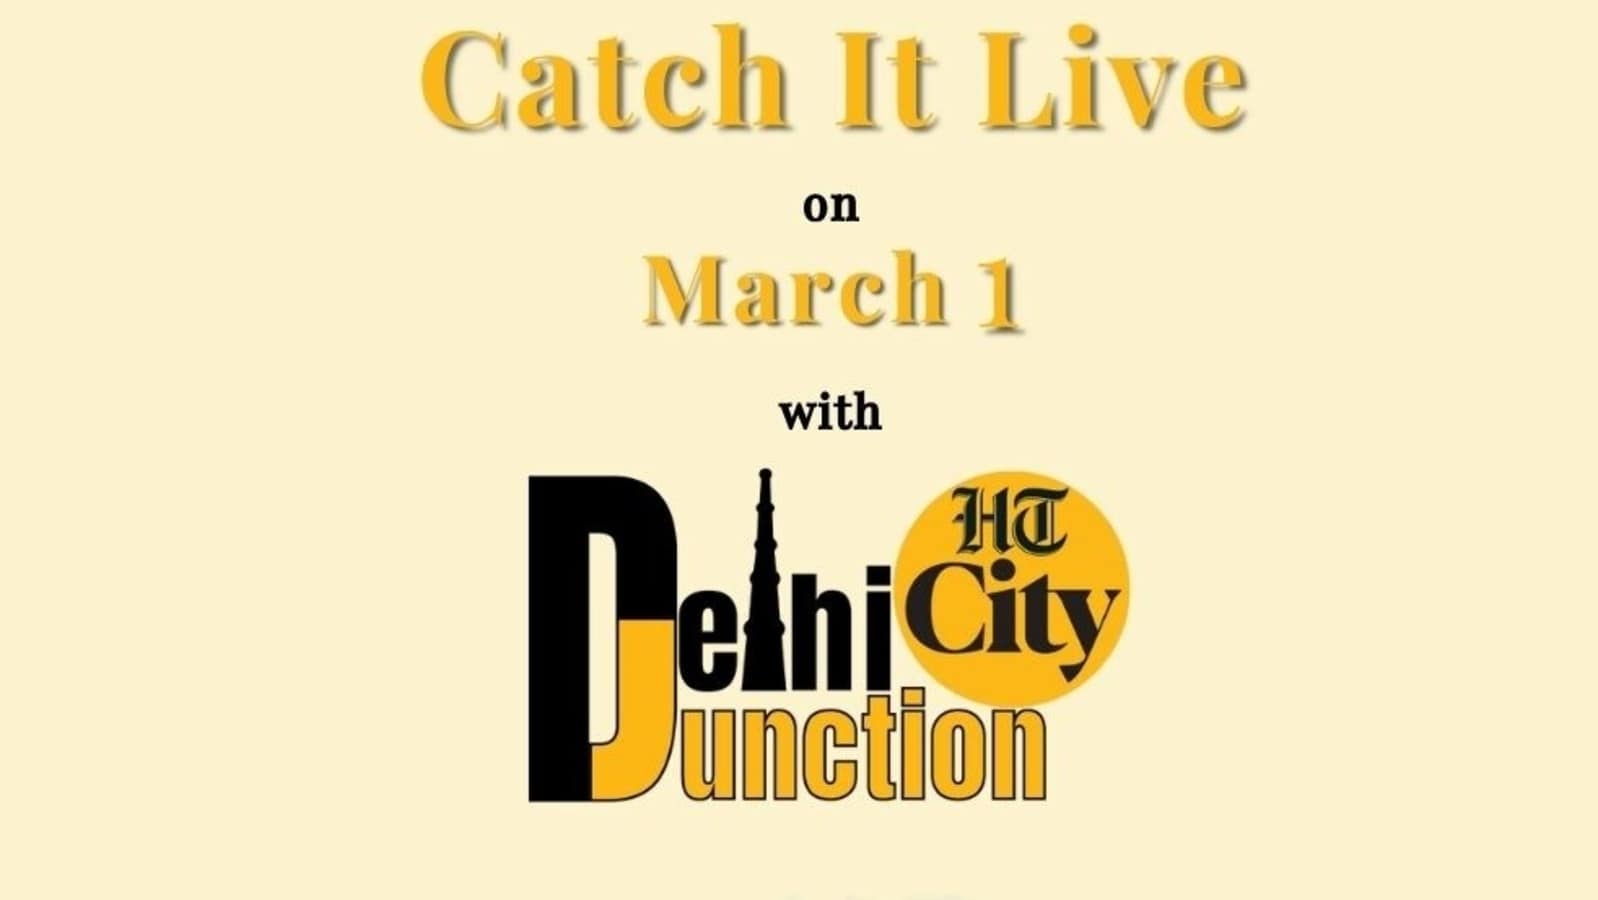 HT City Delhi Junction: Catch It Live on March 1